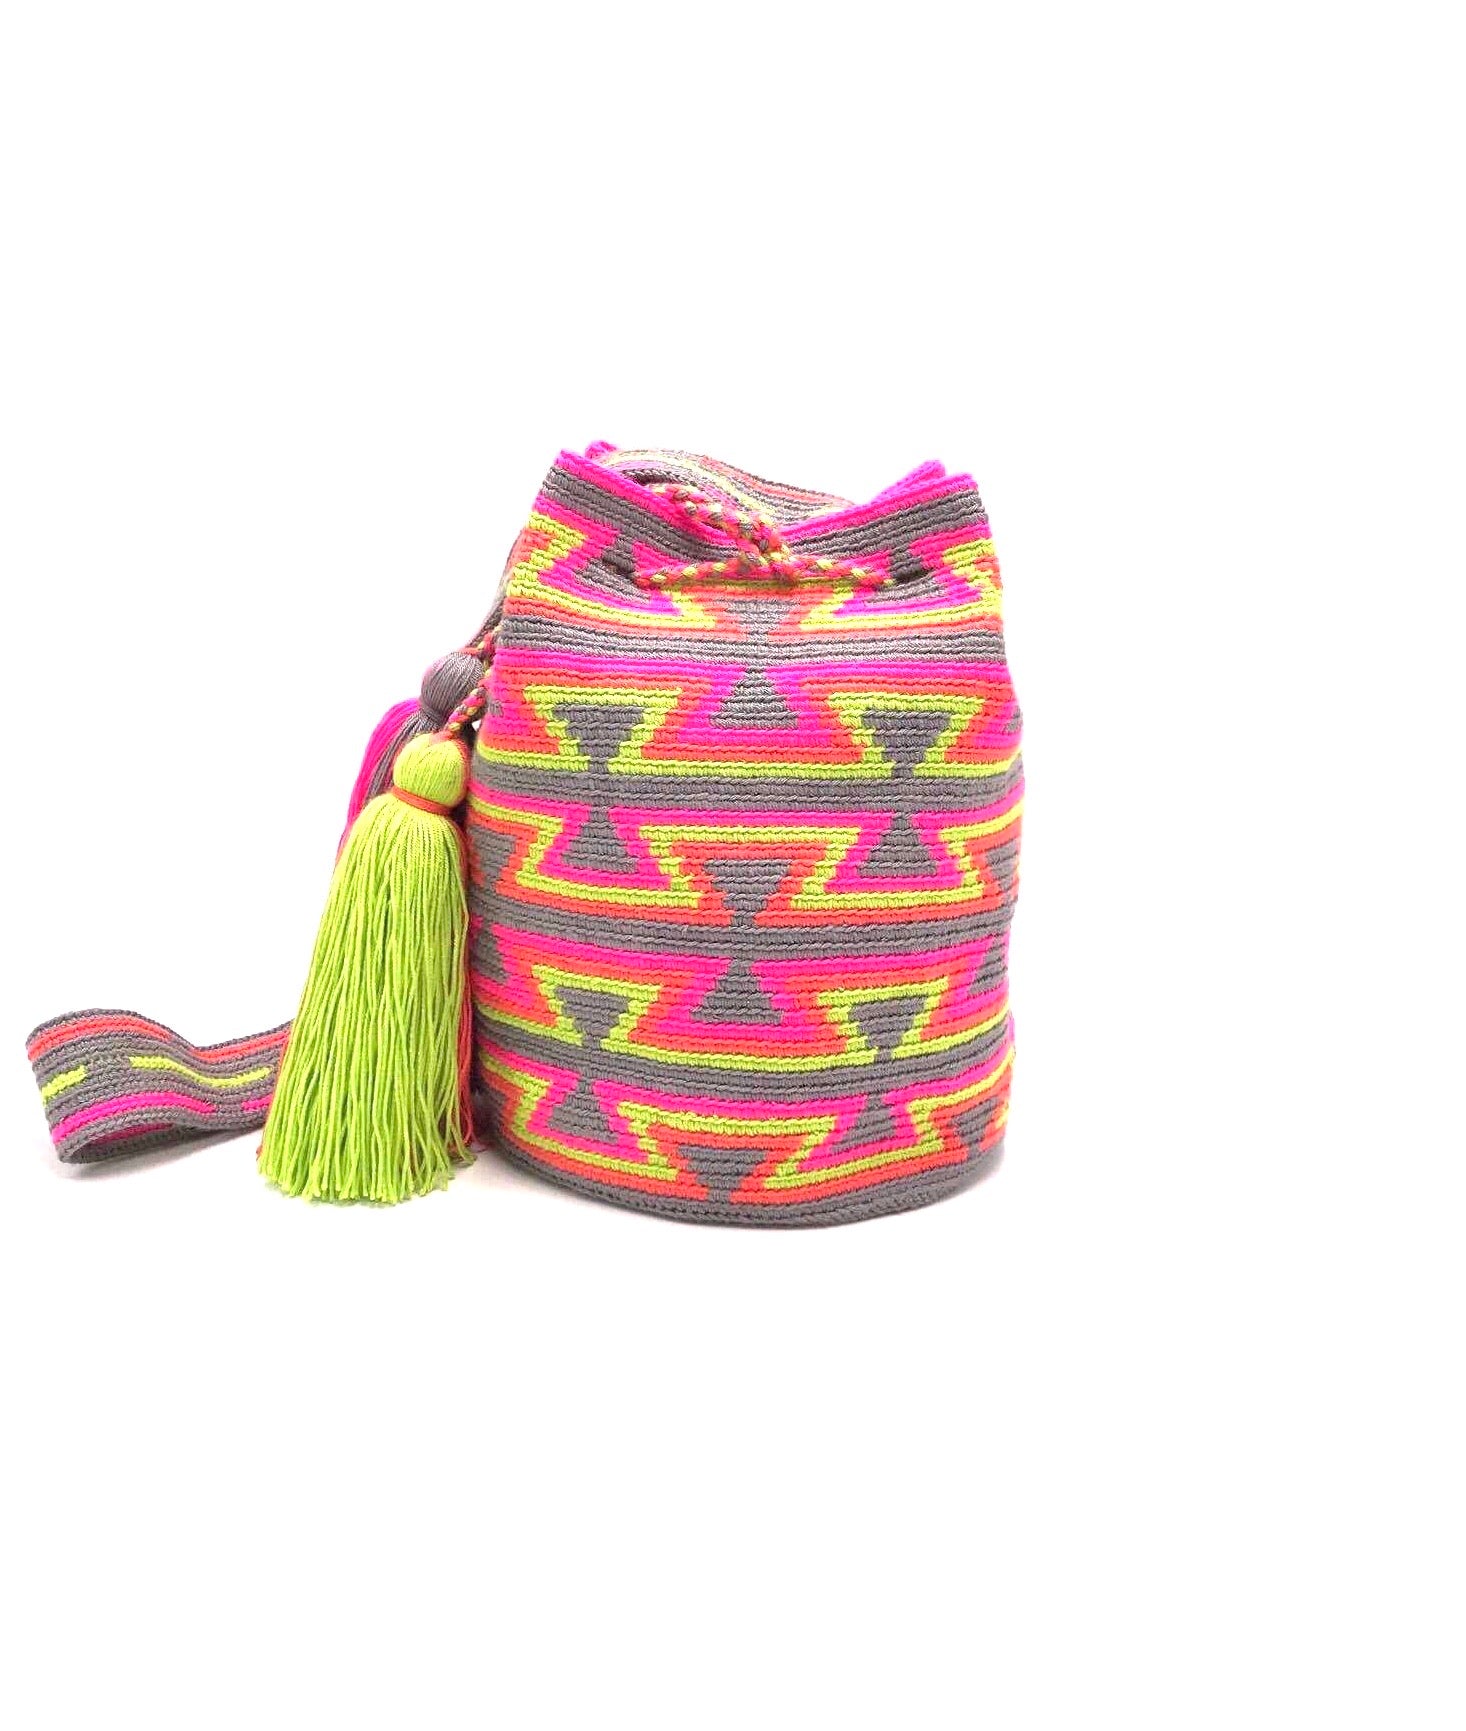 Pompom bag, mini, wayuu pattern, grey body fluo pink and green triangles.